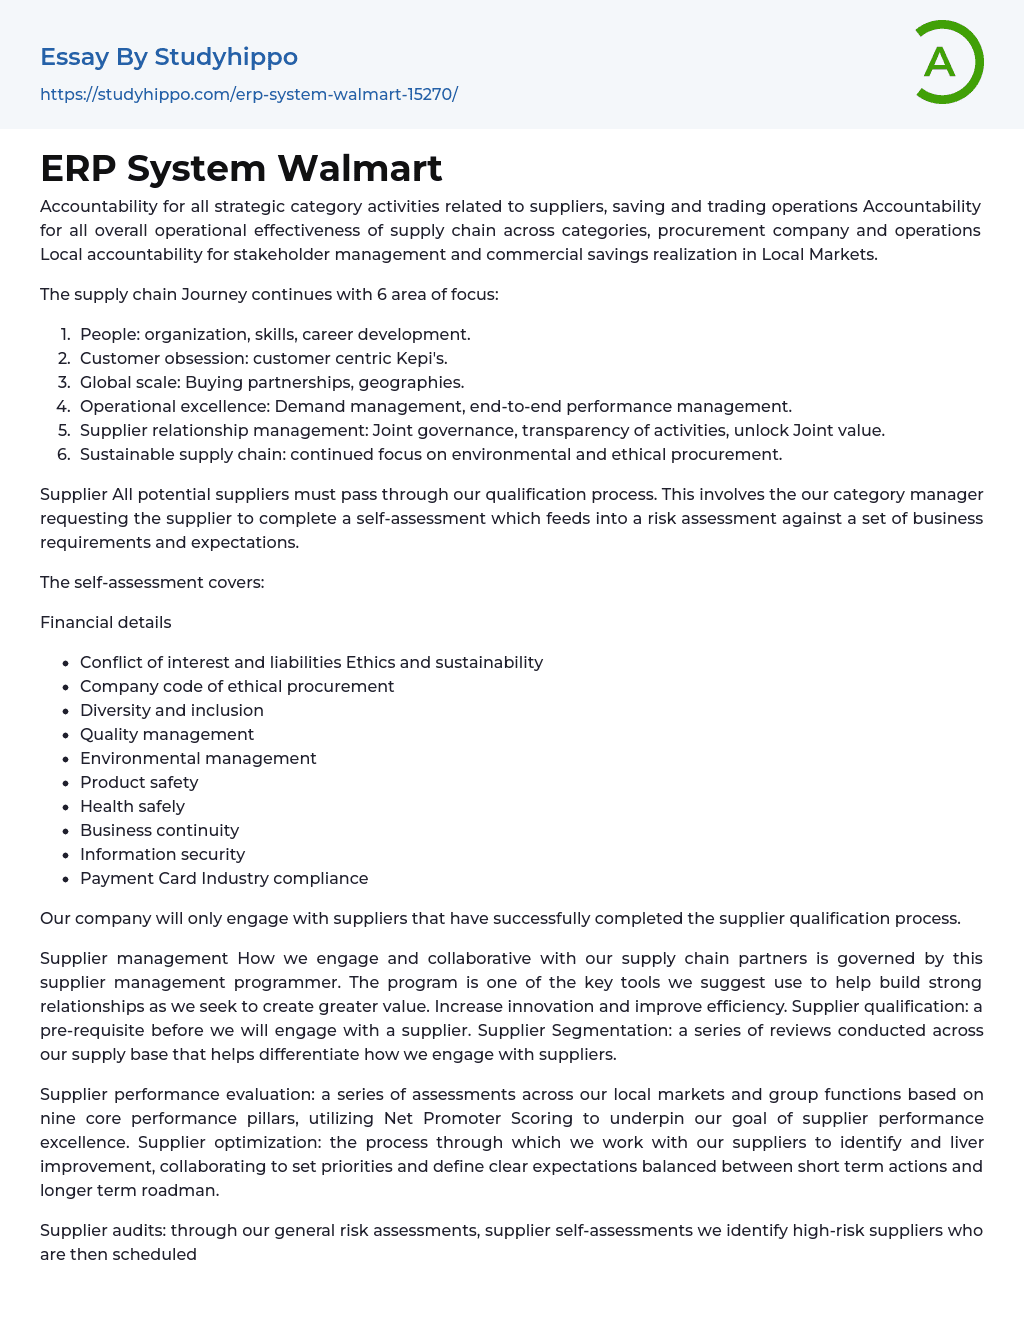 ERP System Walmart Essay Example